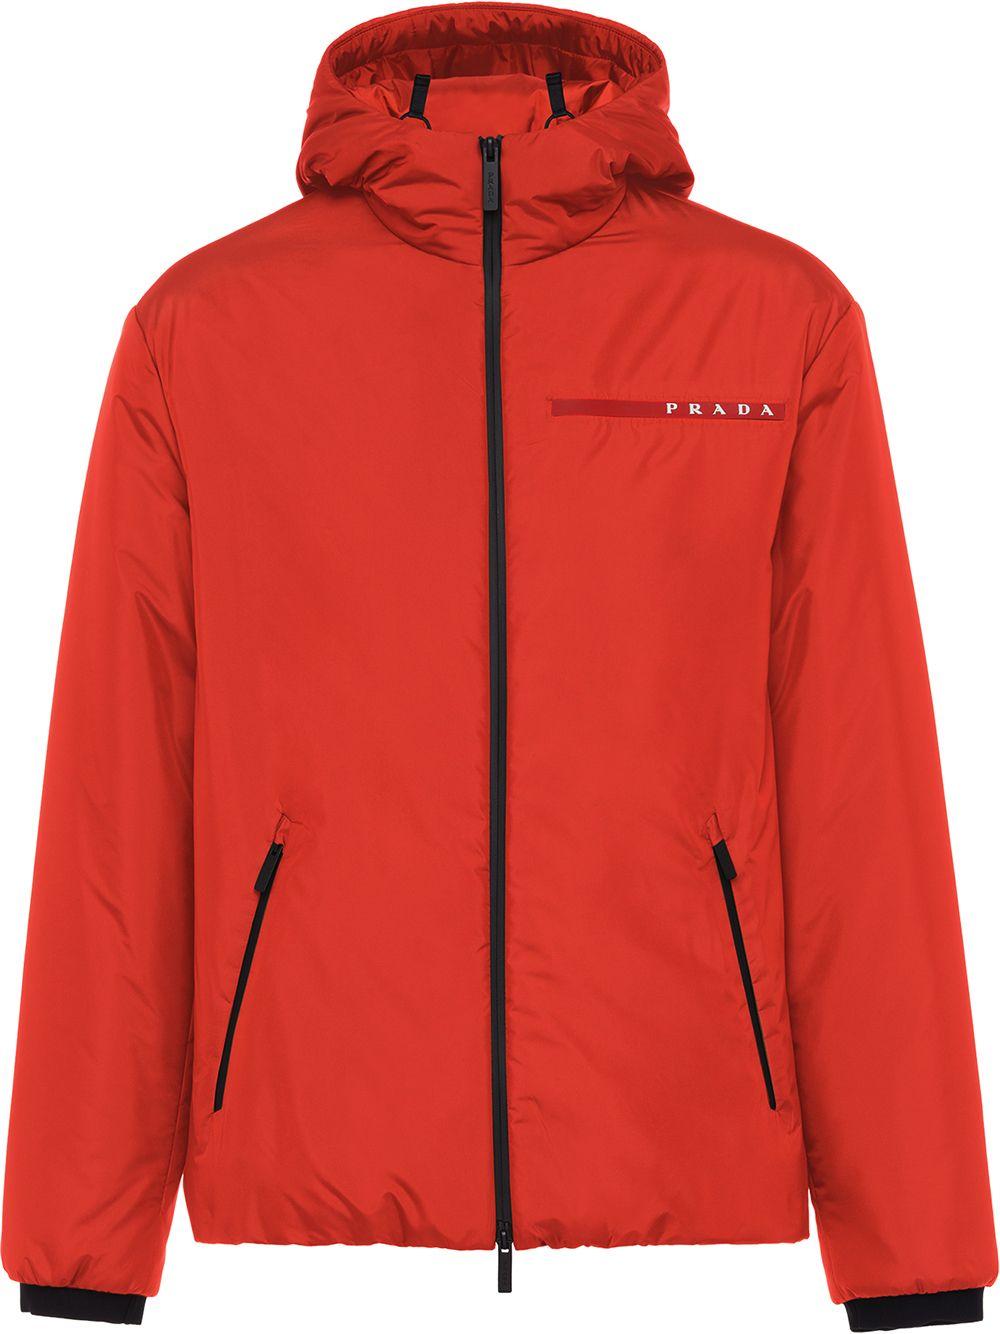 Prada Logo-stripe Technical Jacket in Red for Men - Lyst